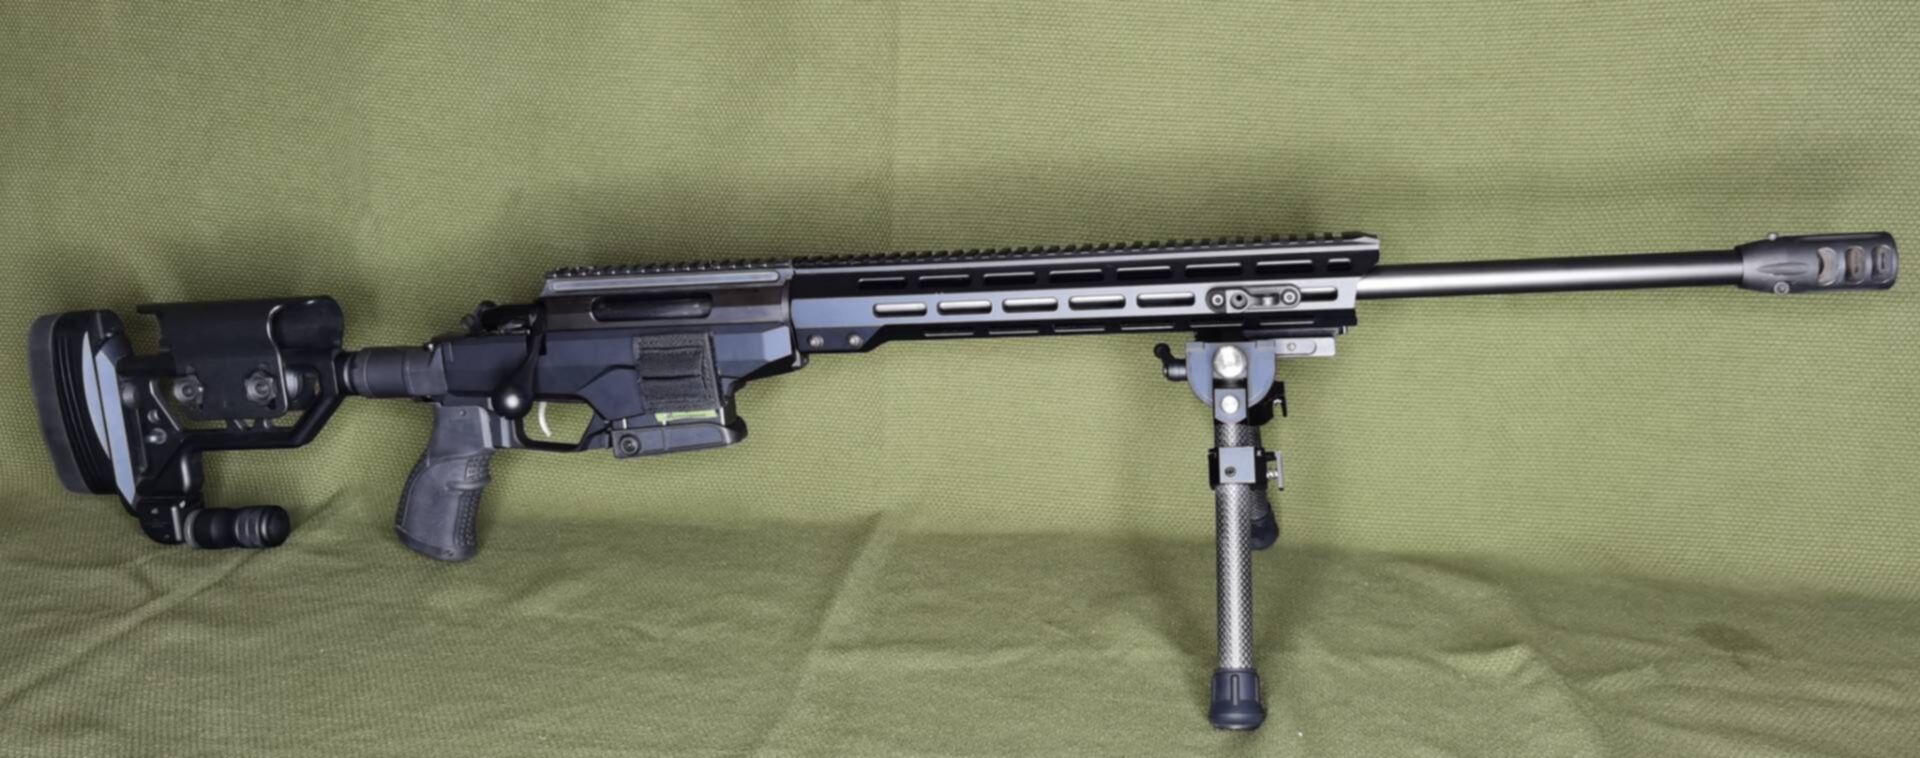 Tikka t3x tac a1 vs ruger precision rifle